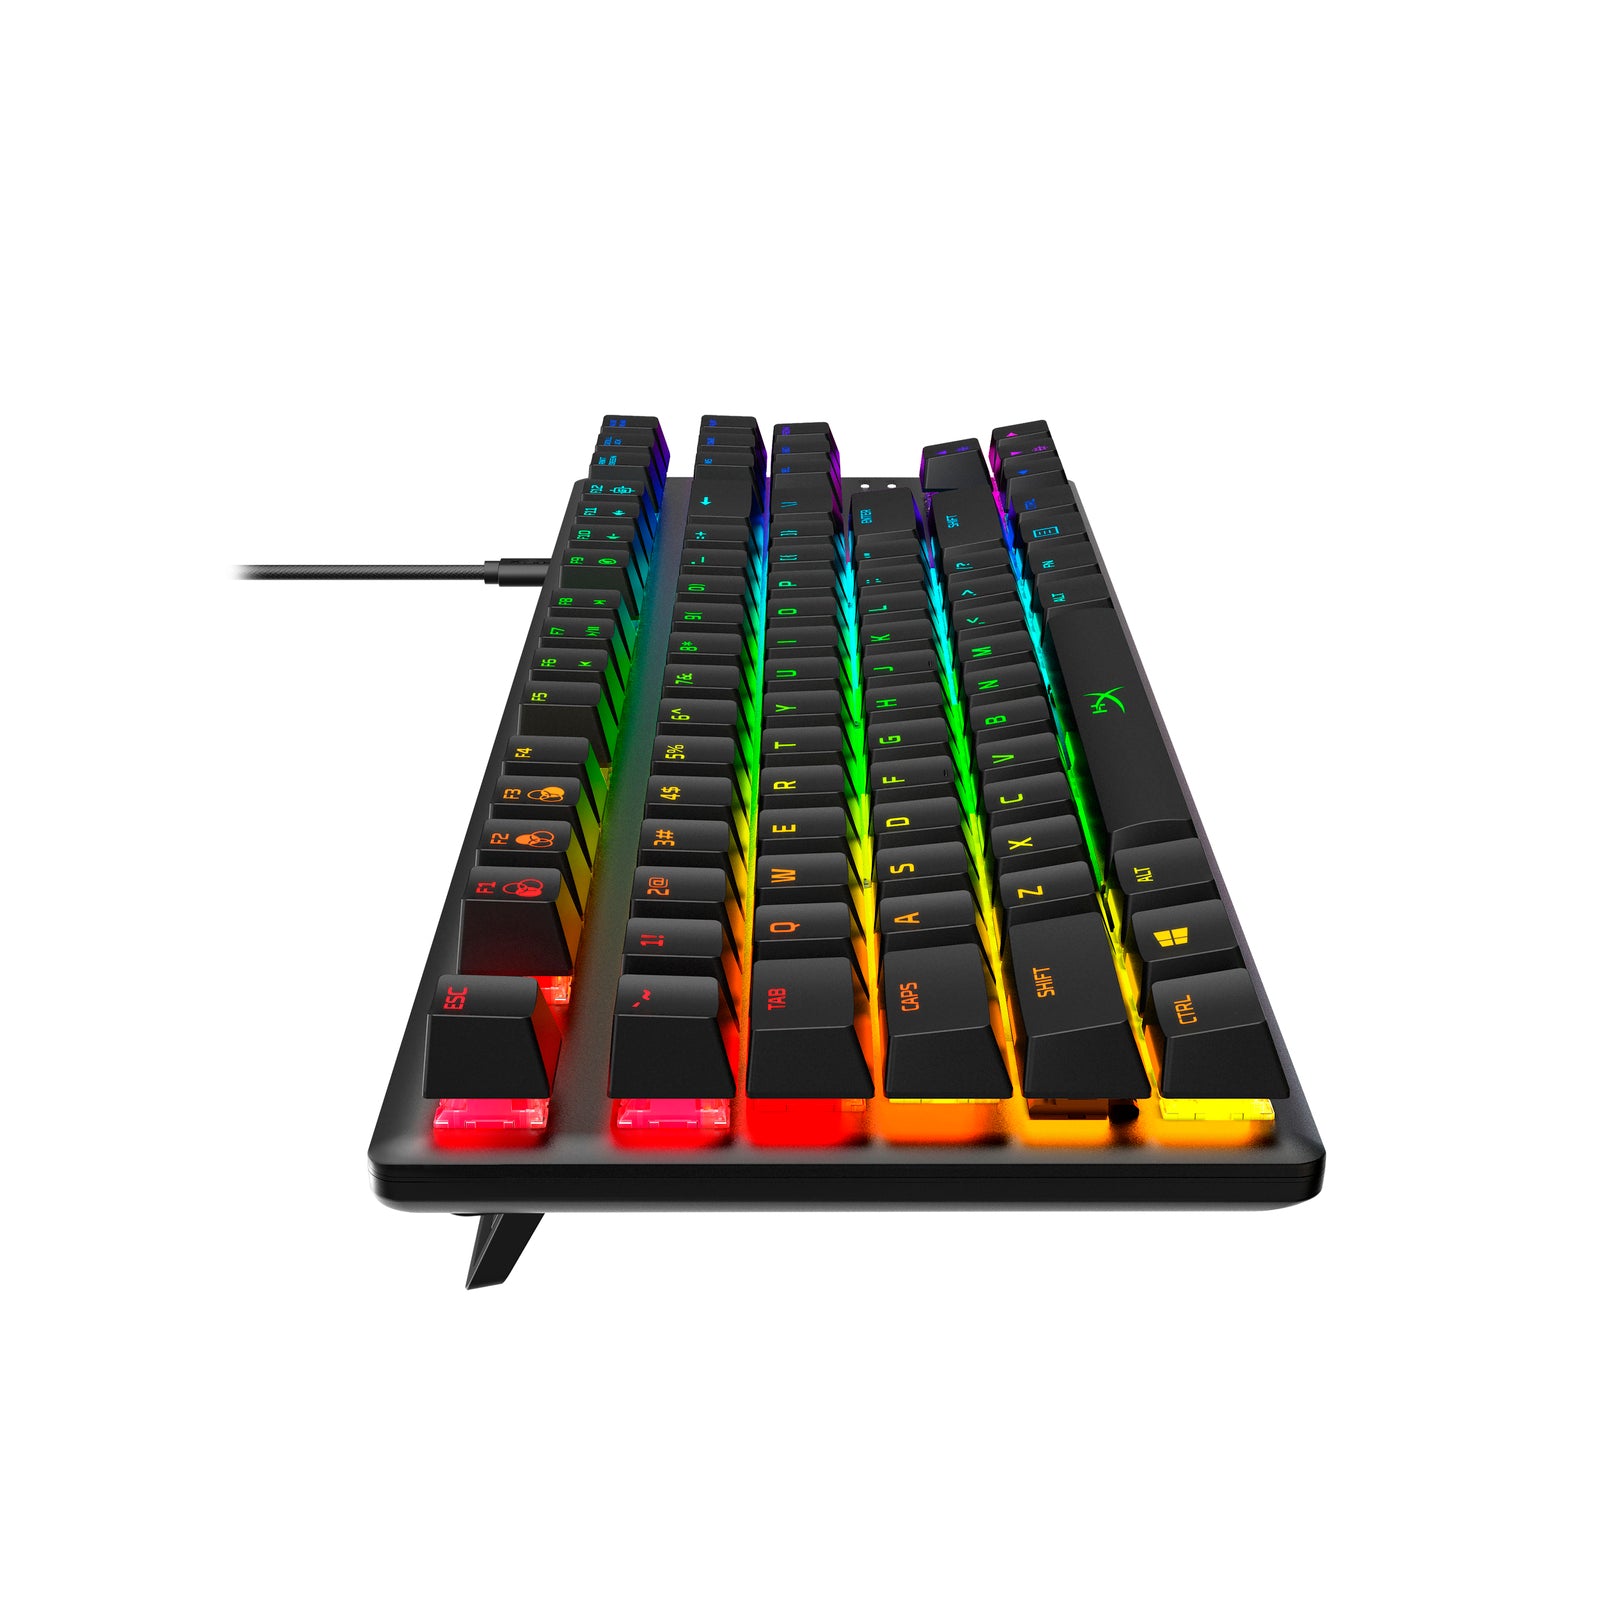 HyperX Alloy Origins Core gaming keyboard, side view displaying RGB lighting effects